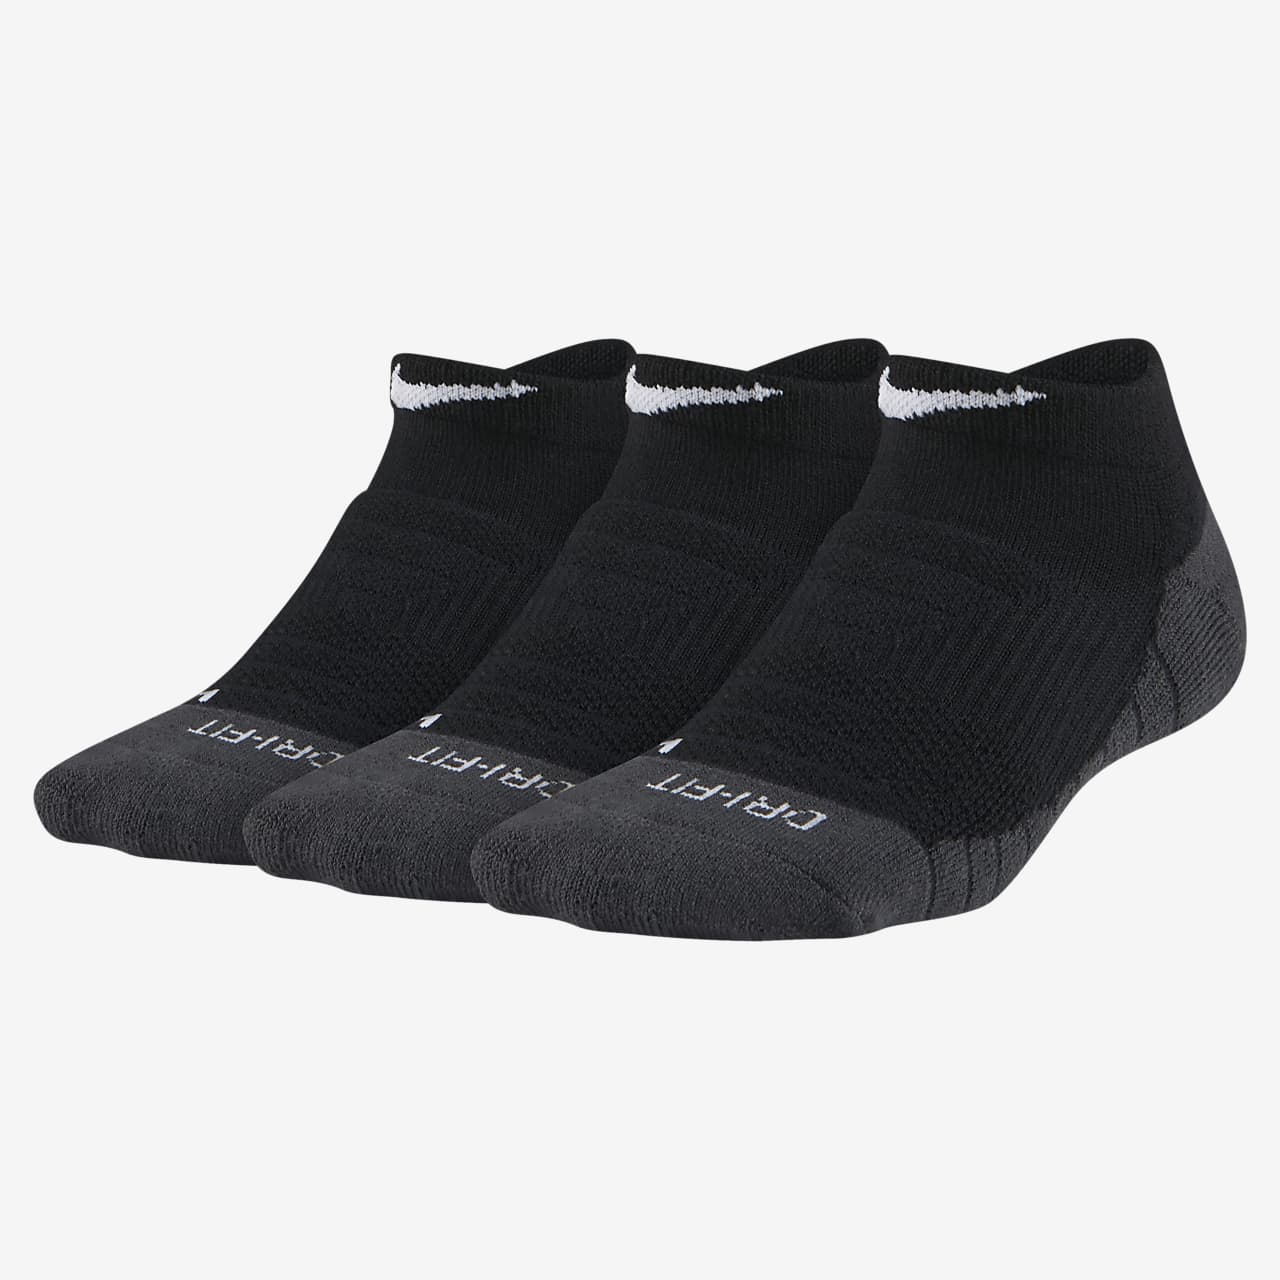 Buy > nike dri fit long socks > in stock